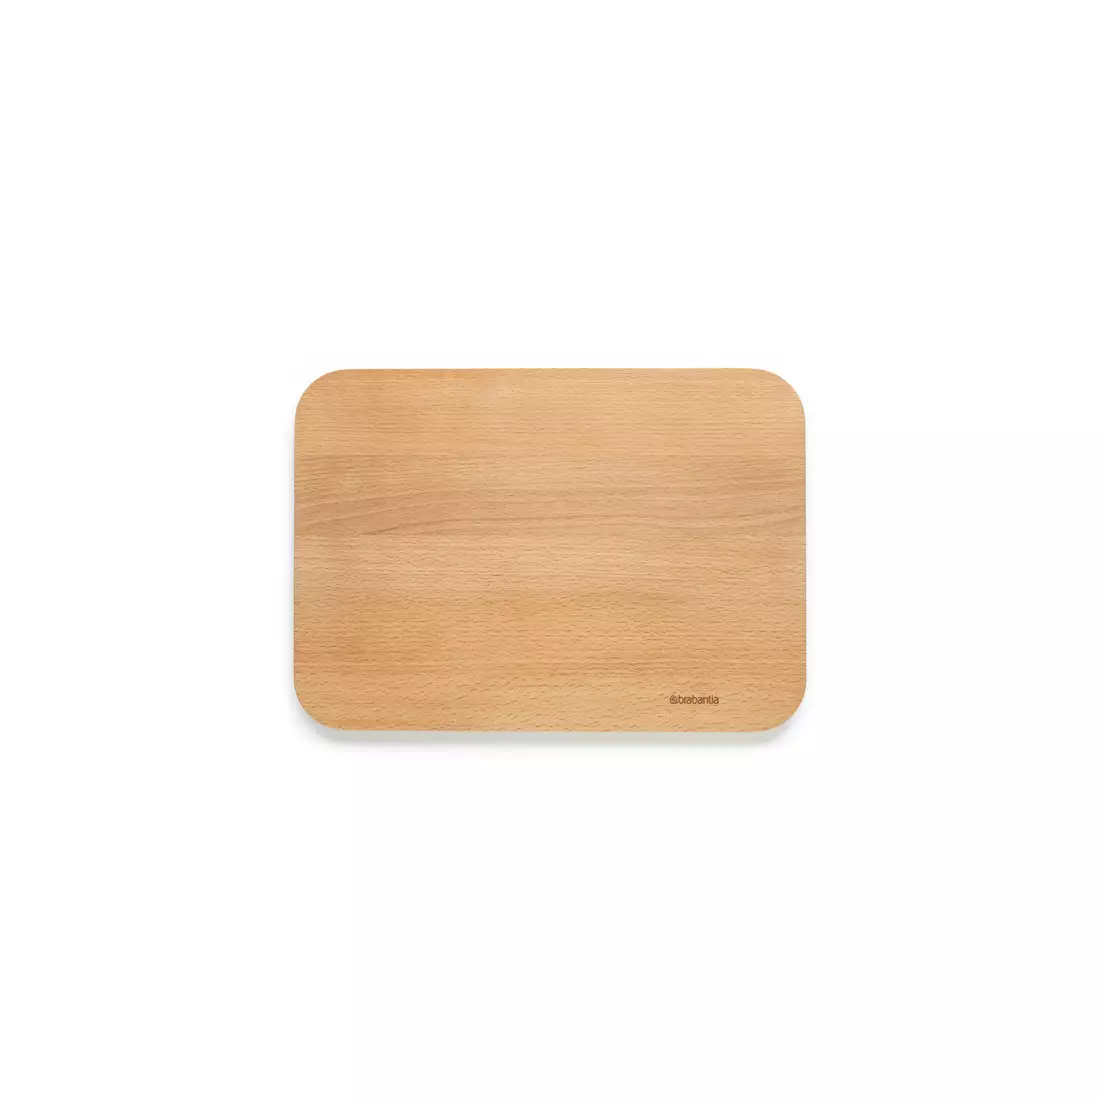 BRABANTIA Profile cutting board, wooden